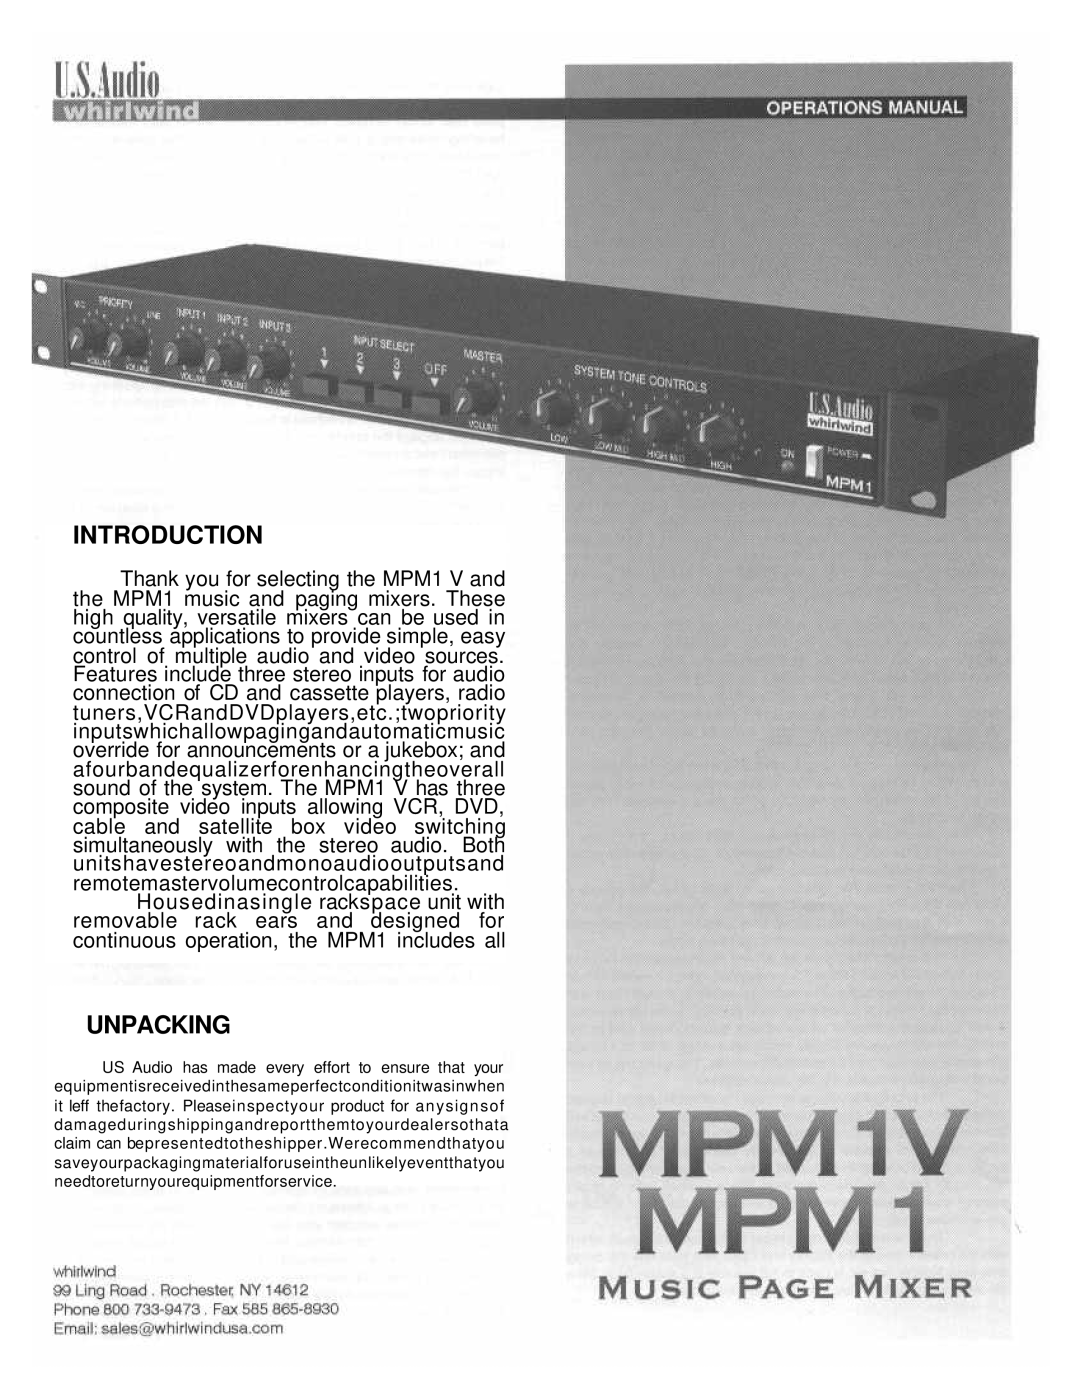 Whirlwind MPM-1V manual Introduction, Unpacking 